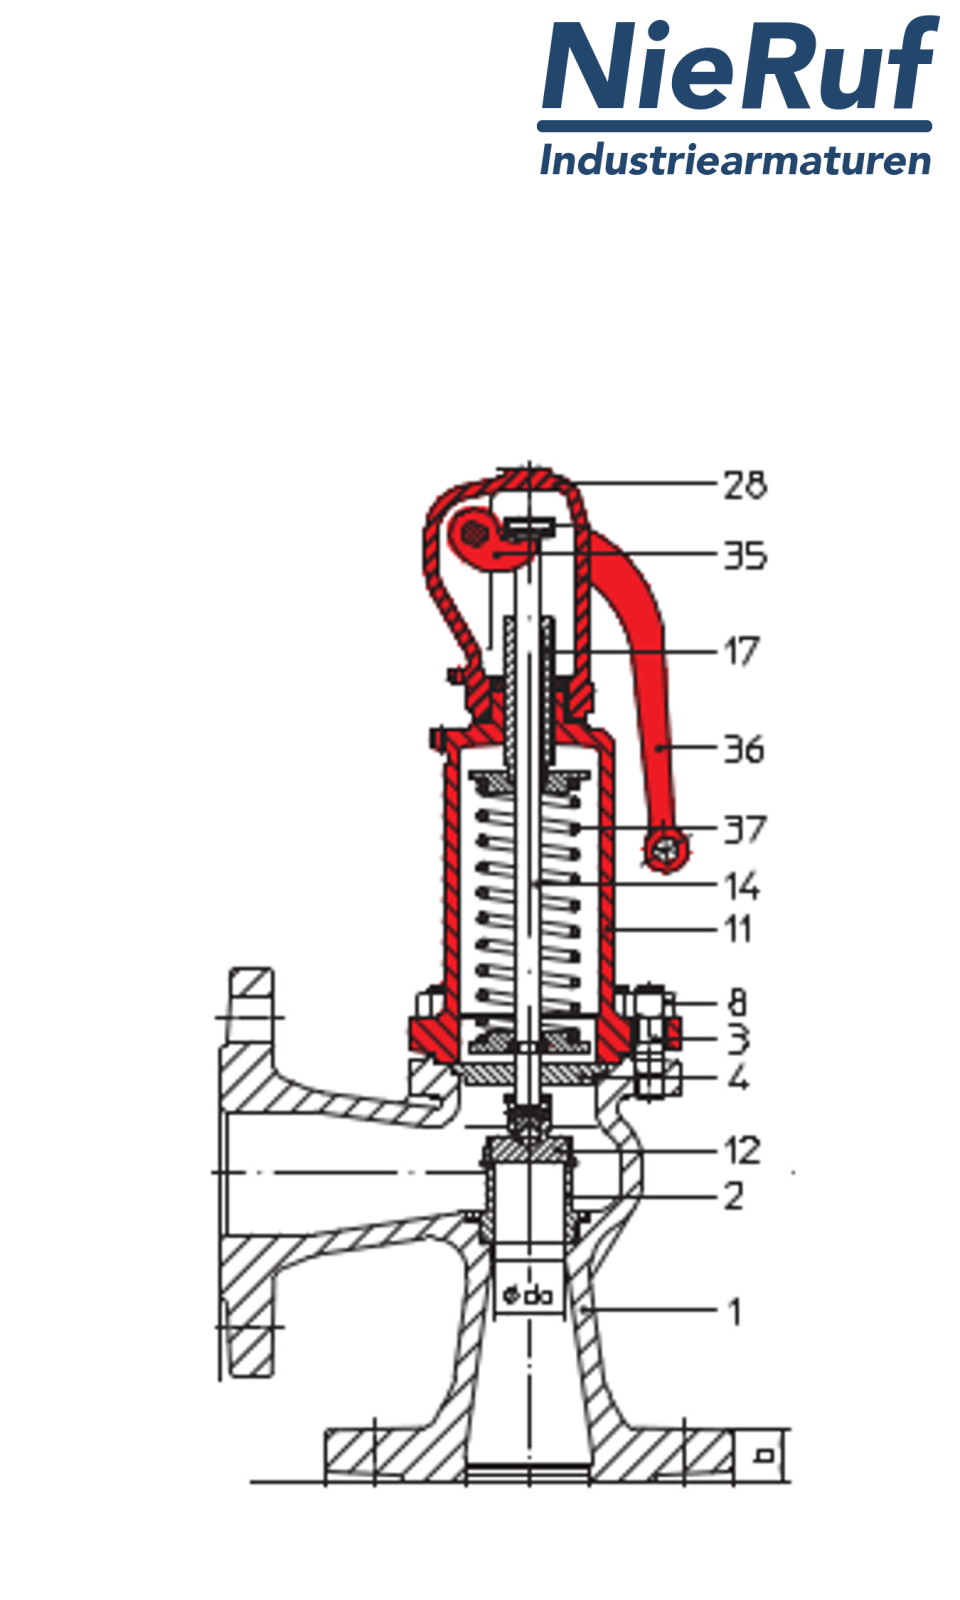 flange-safety valve DN50/DN50 SF01, cast iron EN-JL1040 FPM, with lever